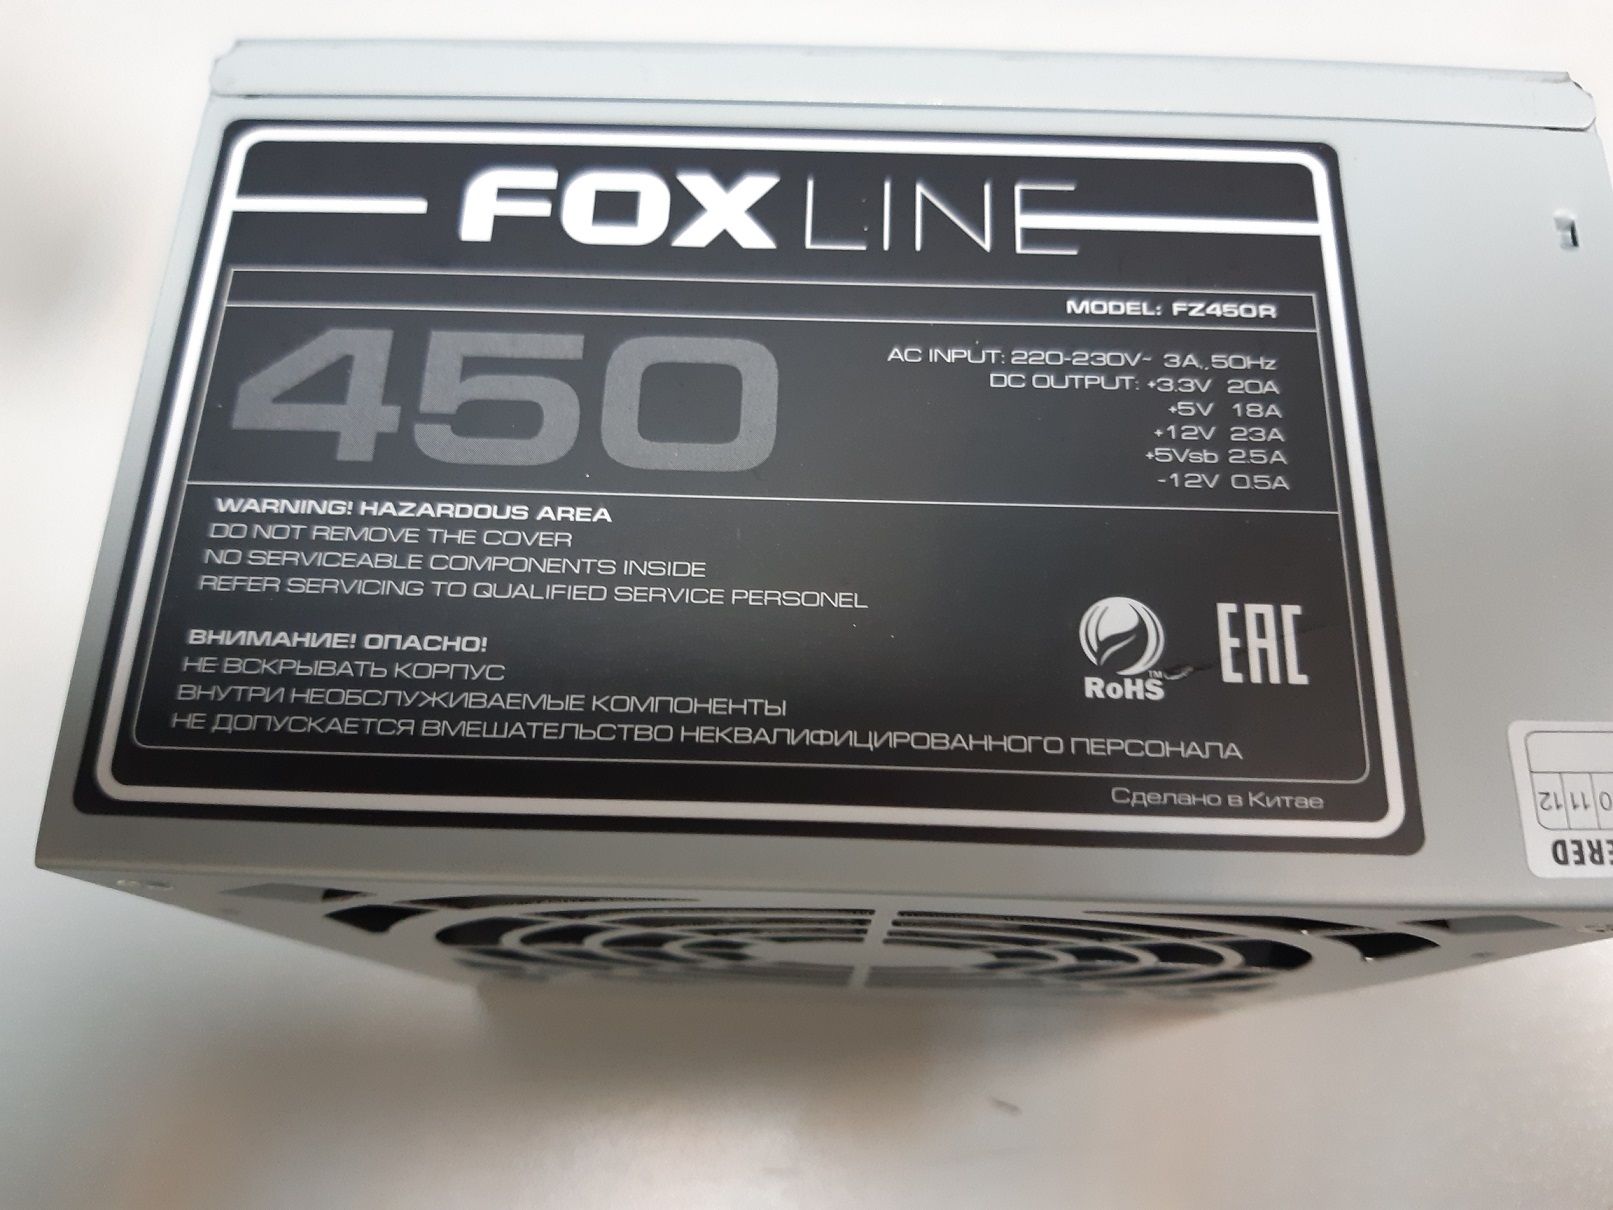 Foxline fz450r. Блок питания Foxline 450w. Блок питания Foxline fz450r 450w, ATX. Блок питания Foxline FZ-450r 450w. Блок питания Foxline 450.